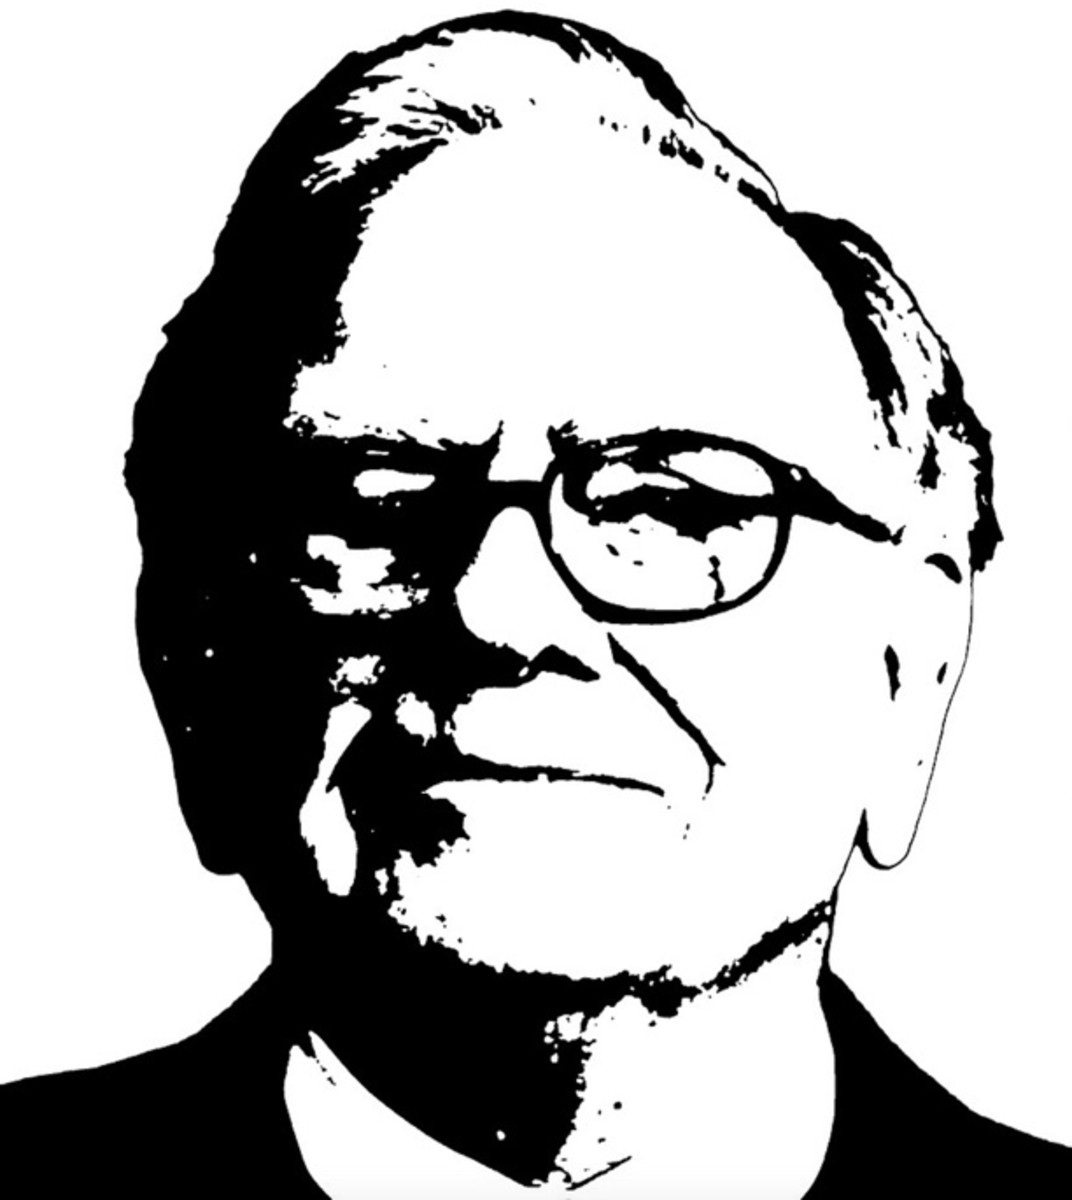 Warren Buffett, The Oracle of Omaha